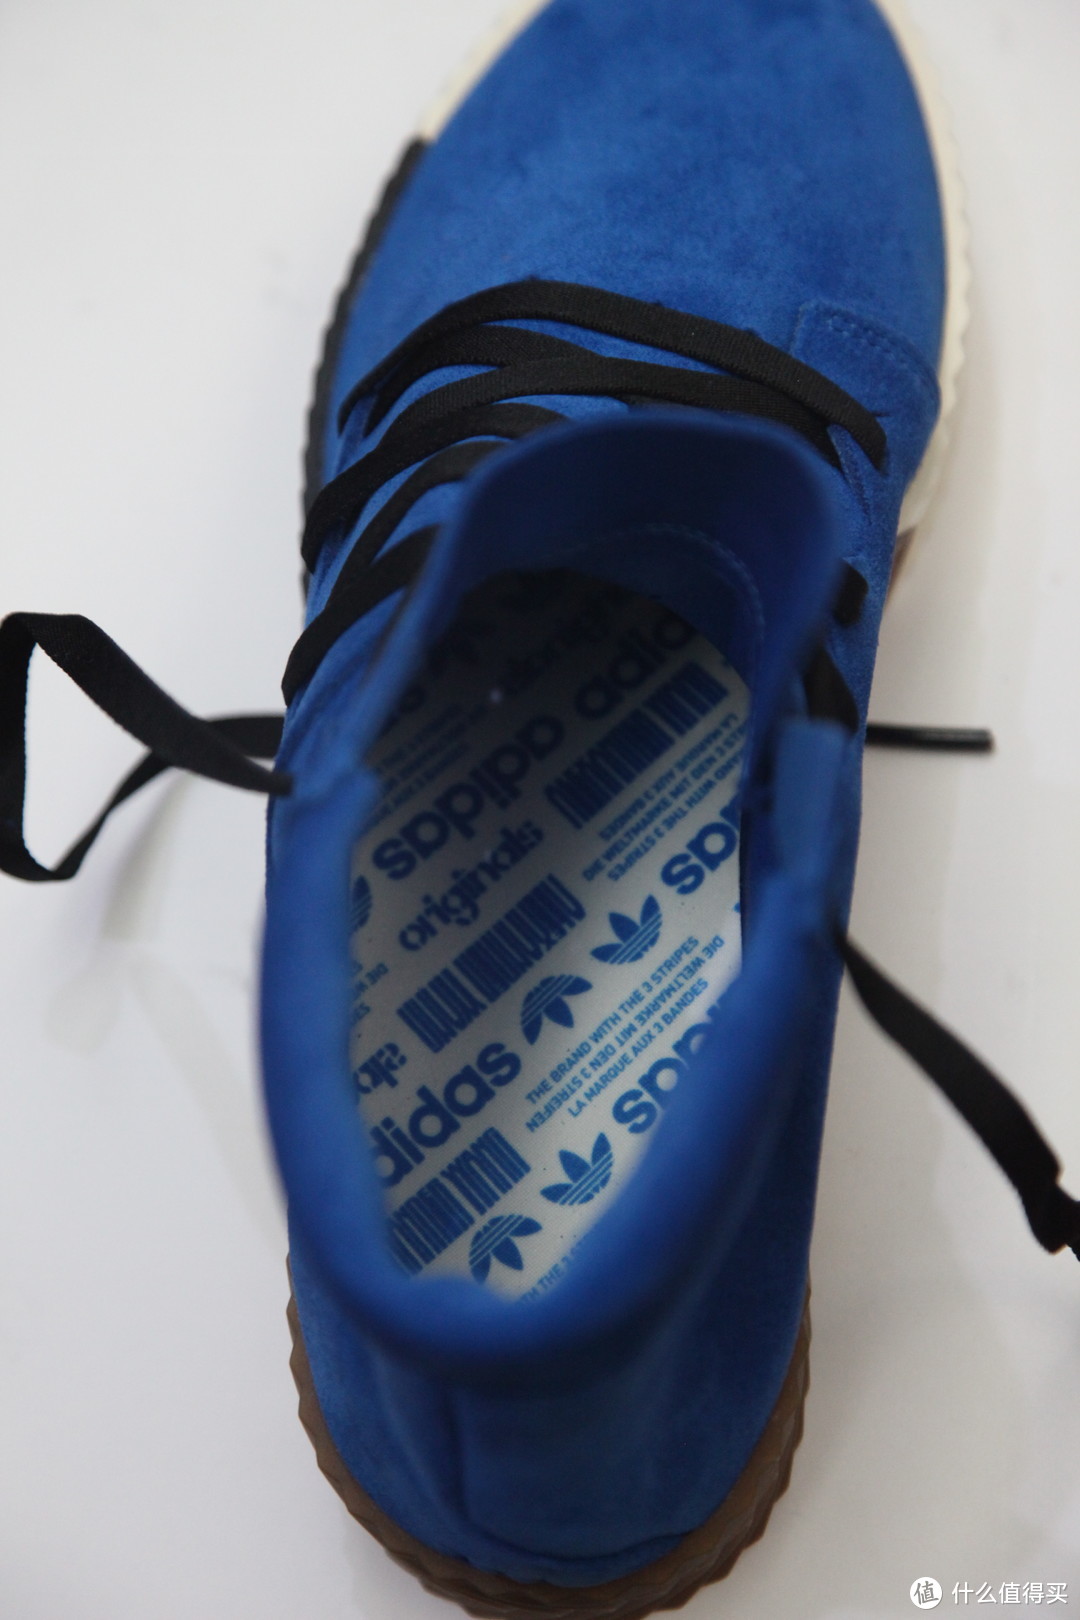 Adidas Originals by AW Skate Shoes 阿迪达斯 三叶草 亚历山大王合作款板鞋  Ebay海淘开箱